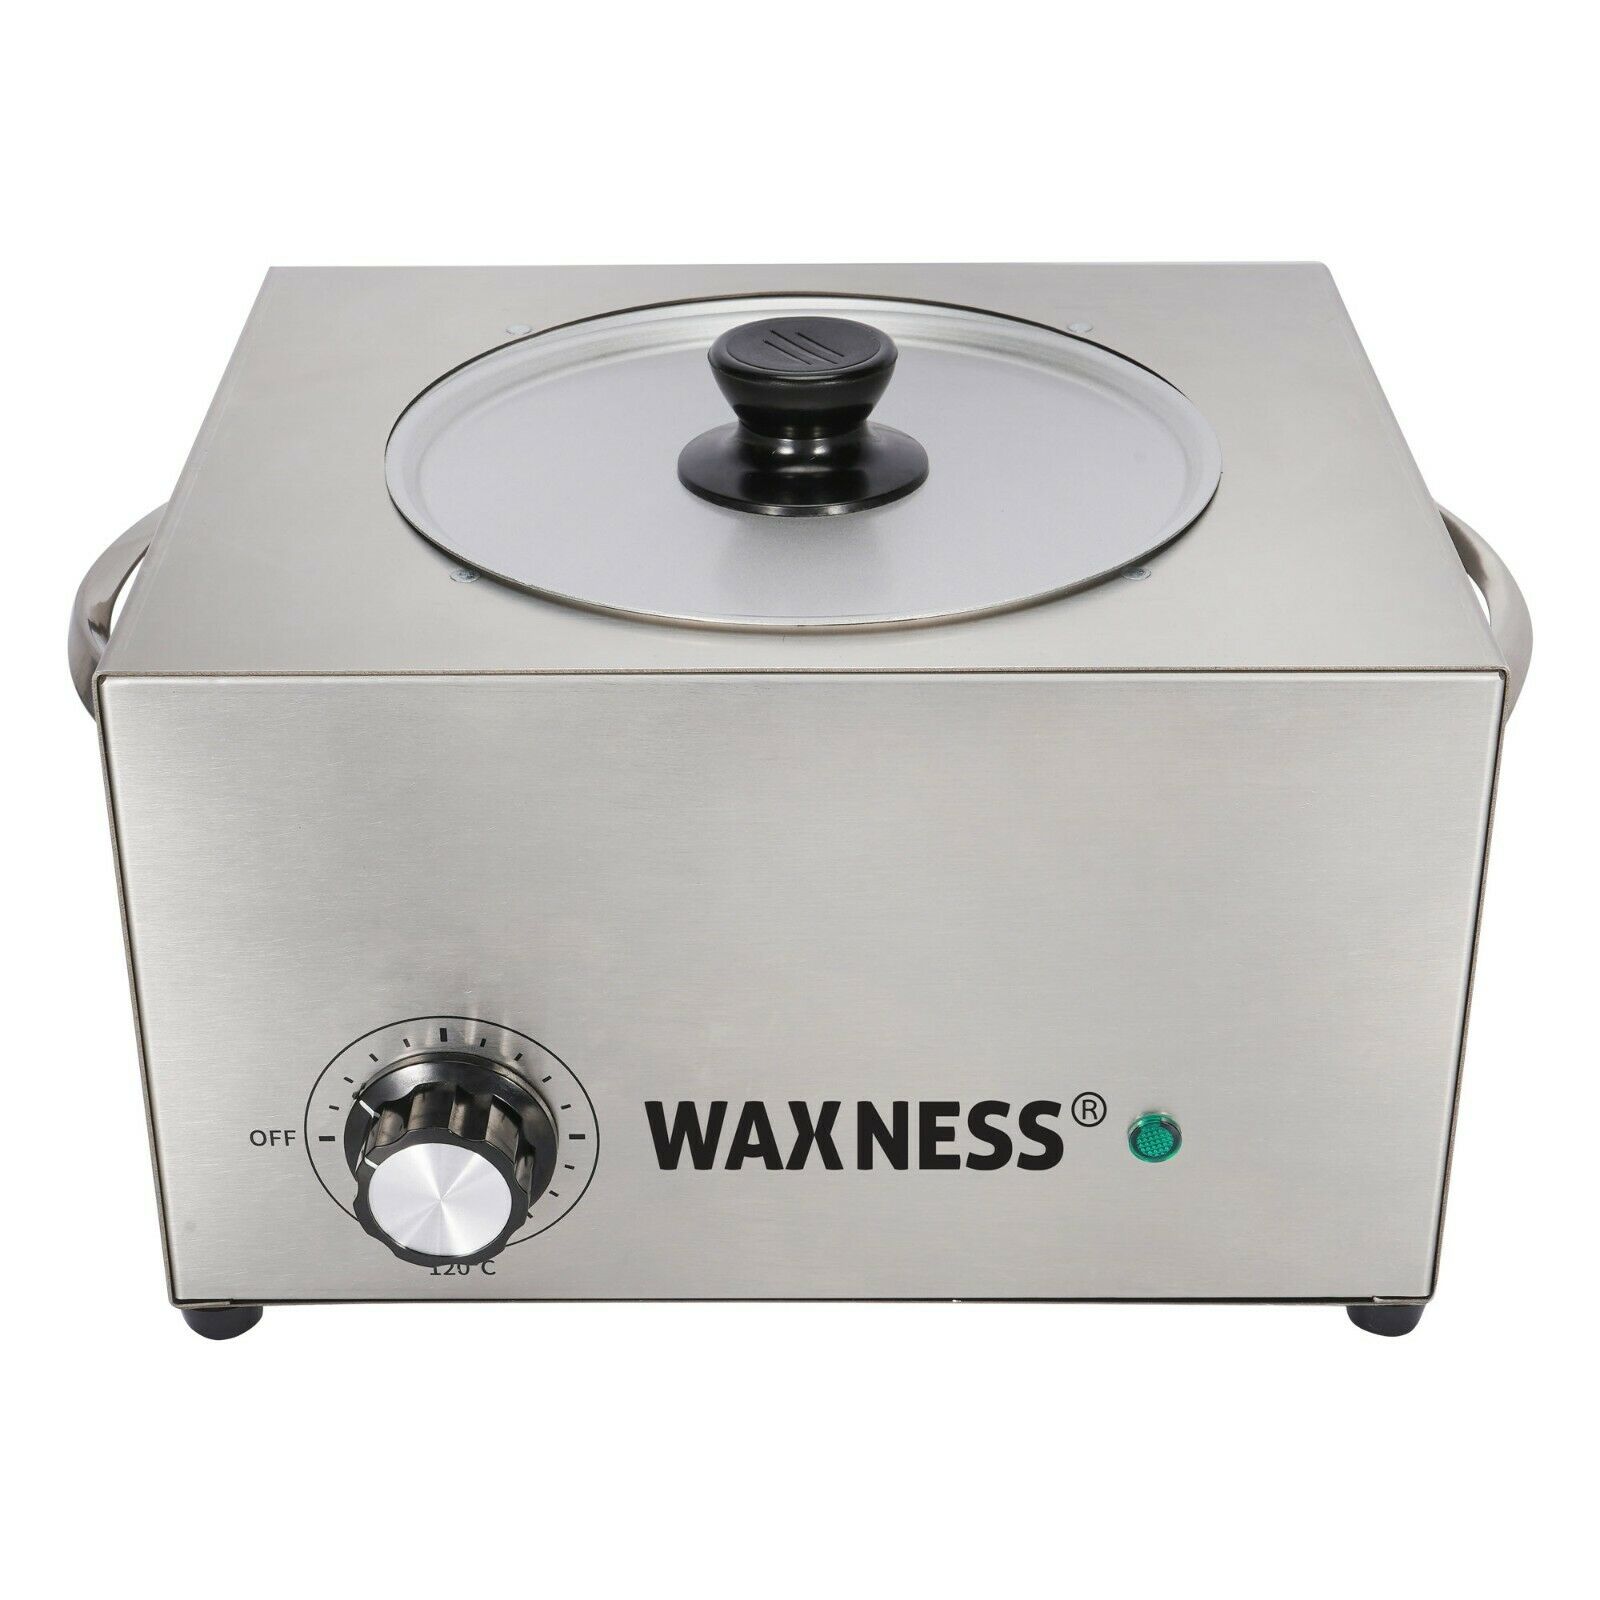 Waxness Large Professional Heater Wn-6003 Steel Holds 5.5 Lb Wax